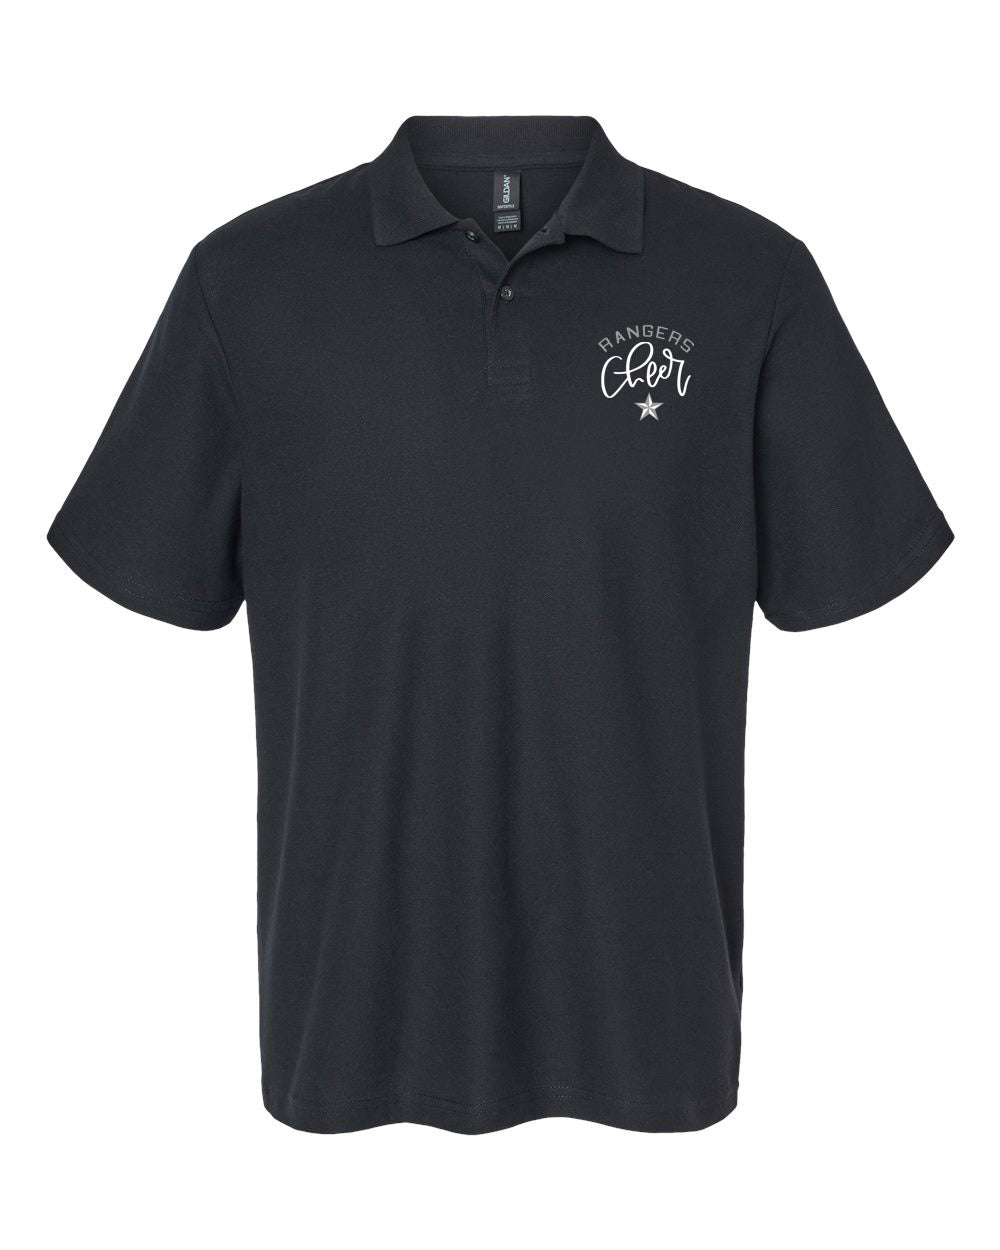 Wallkill Cheer Design 4 Polo T-Shirt